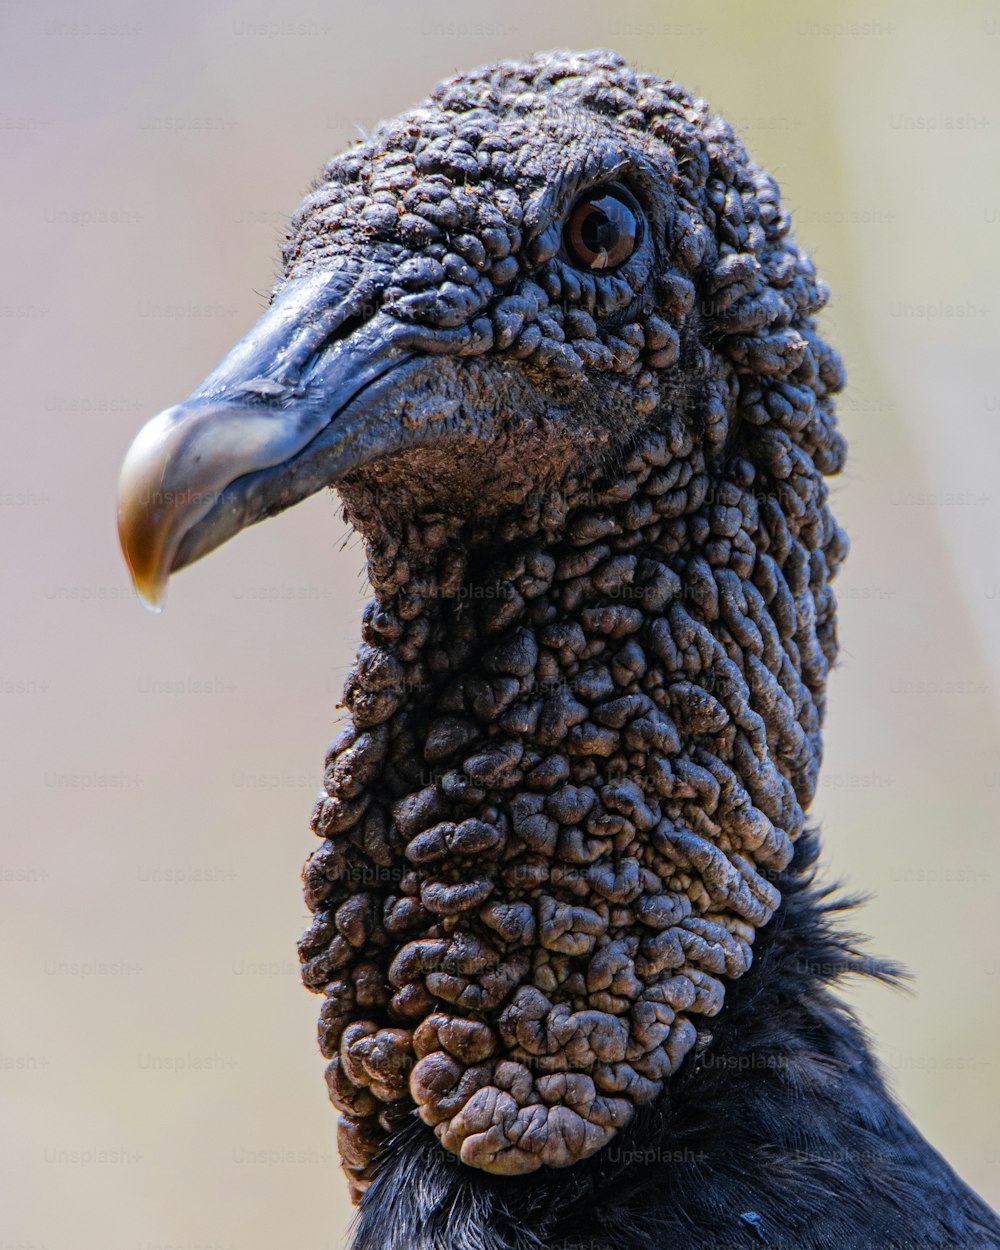 a close up of a bird with a very large beak